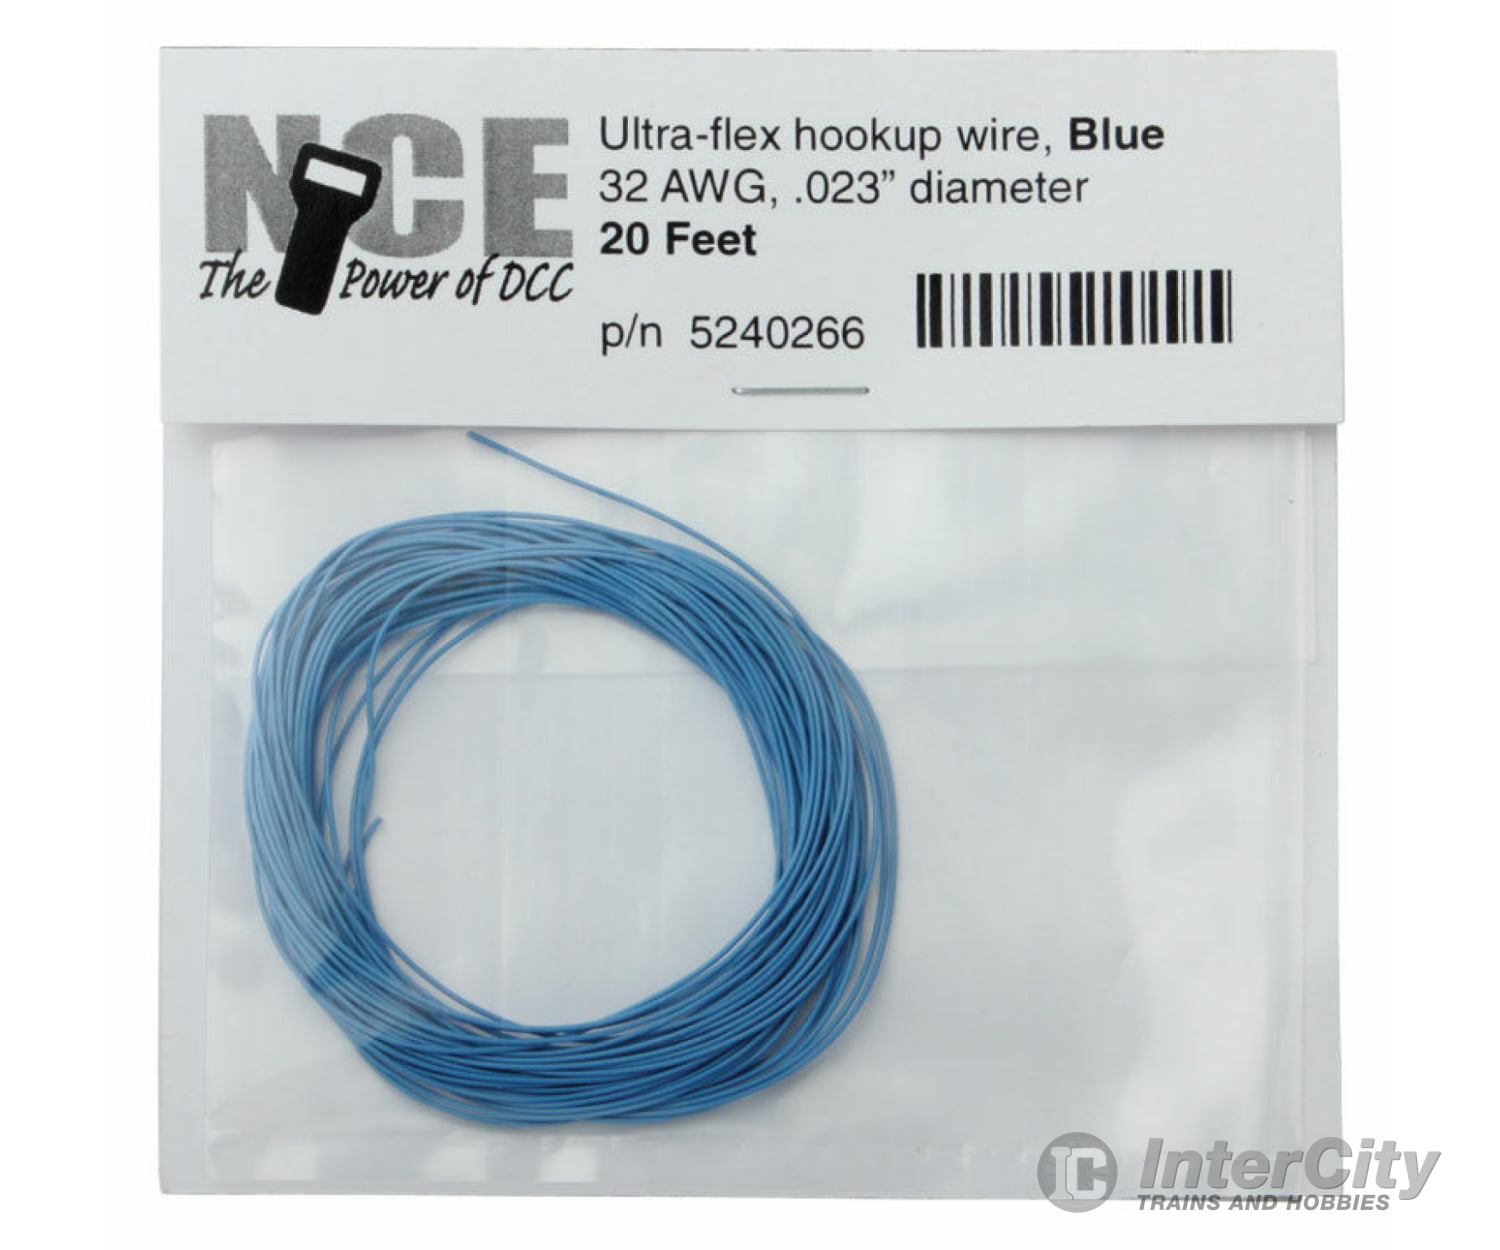 Nce 266 Ultraflex Hook - Up 32Awg.023 Diameter Wire - - Blue 20’ 6.09M Dcc Accessories